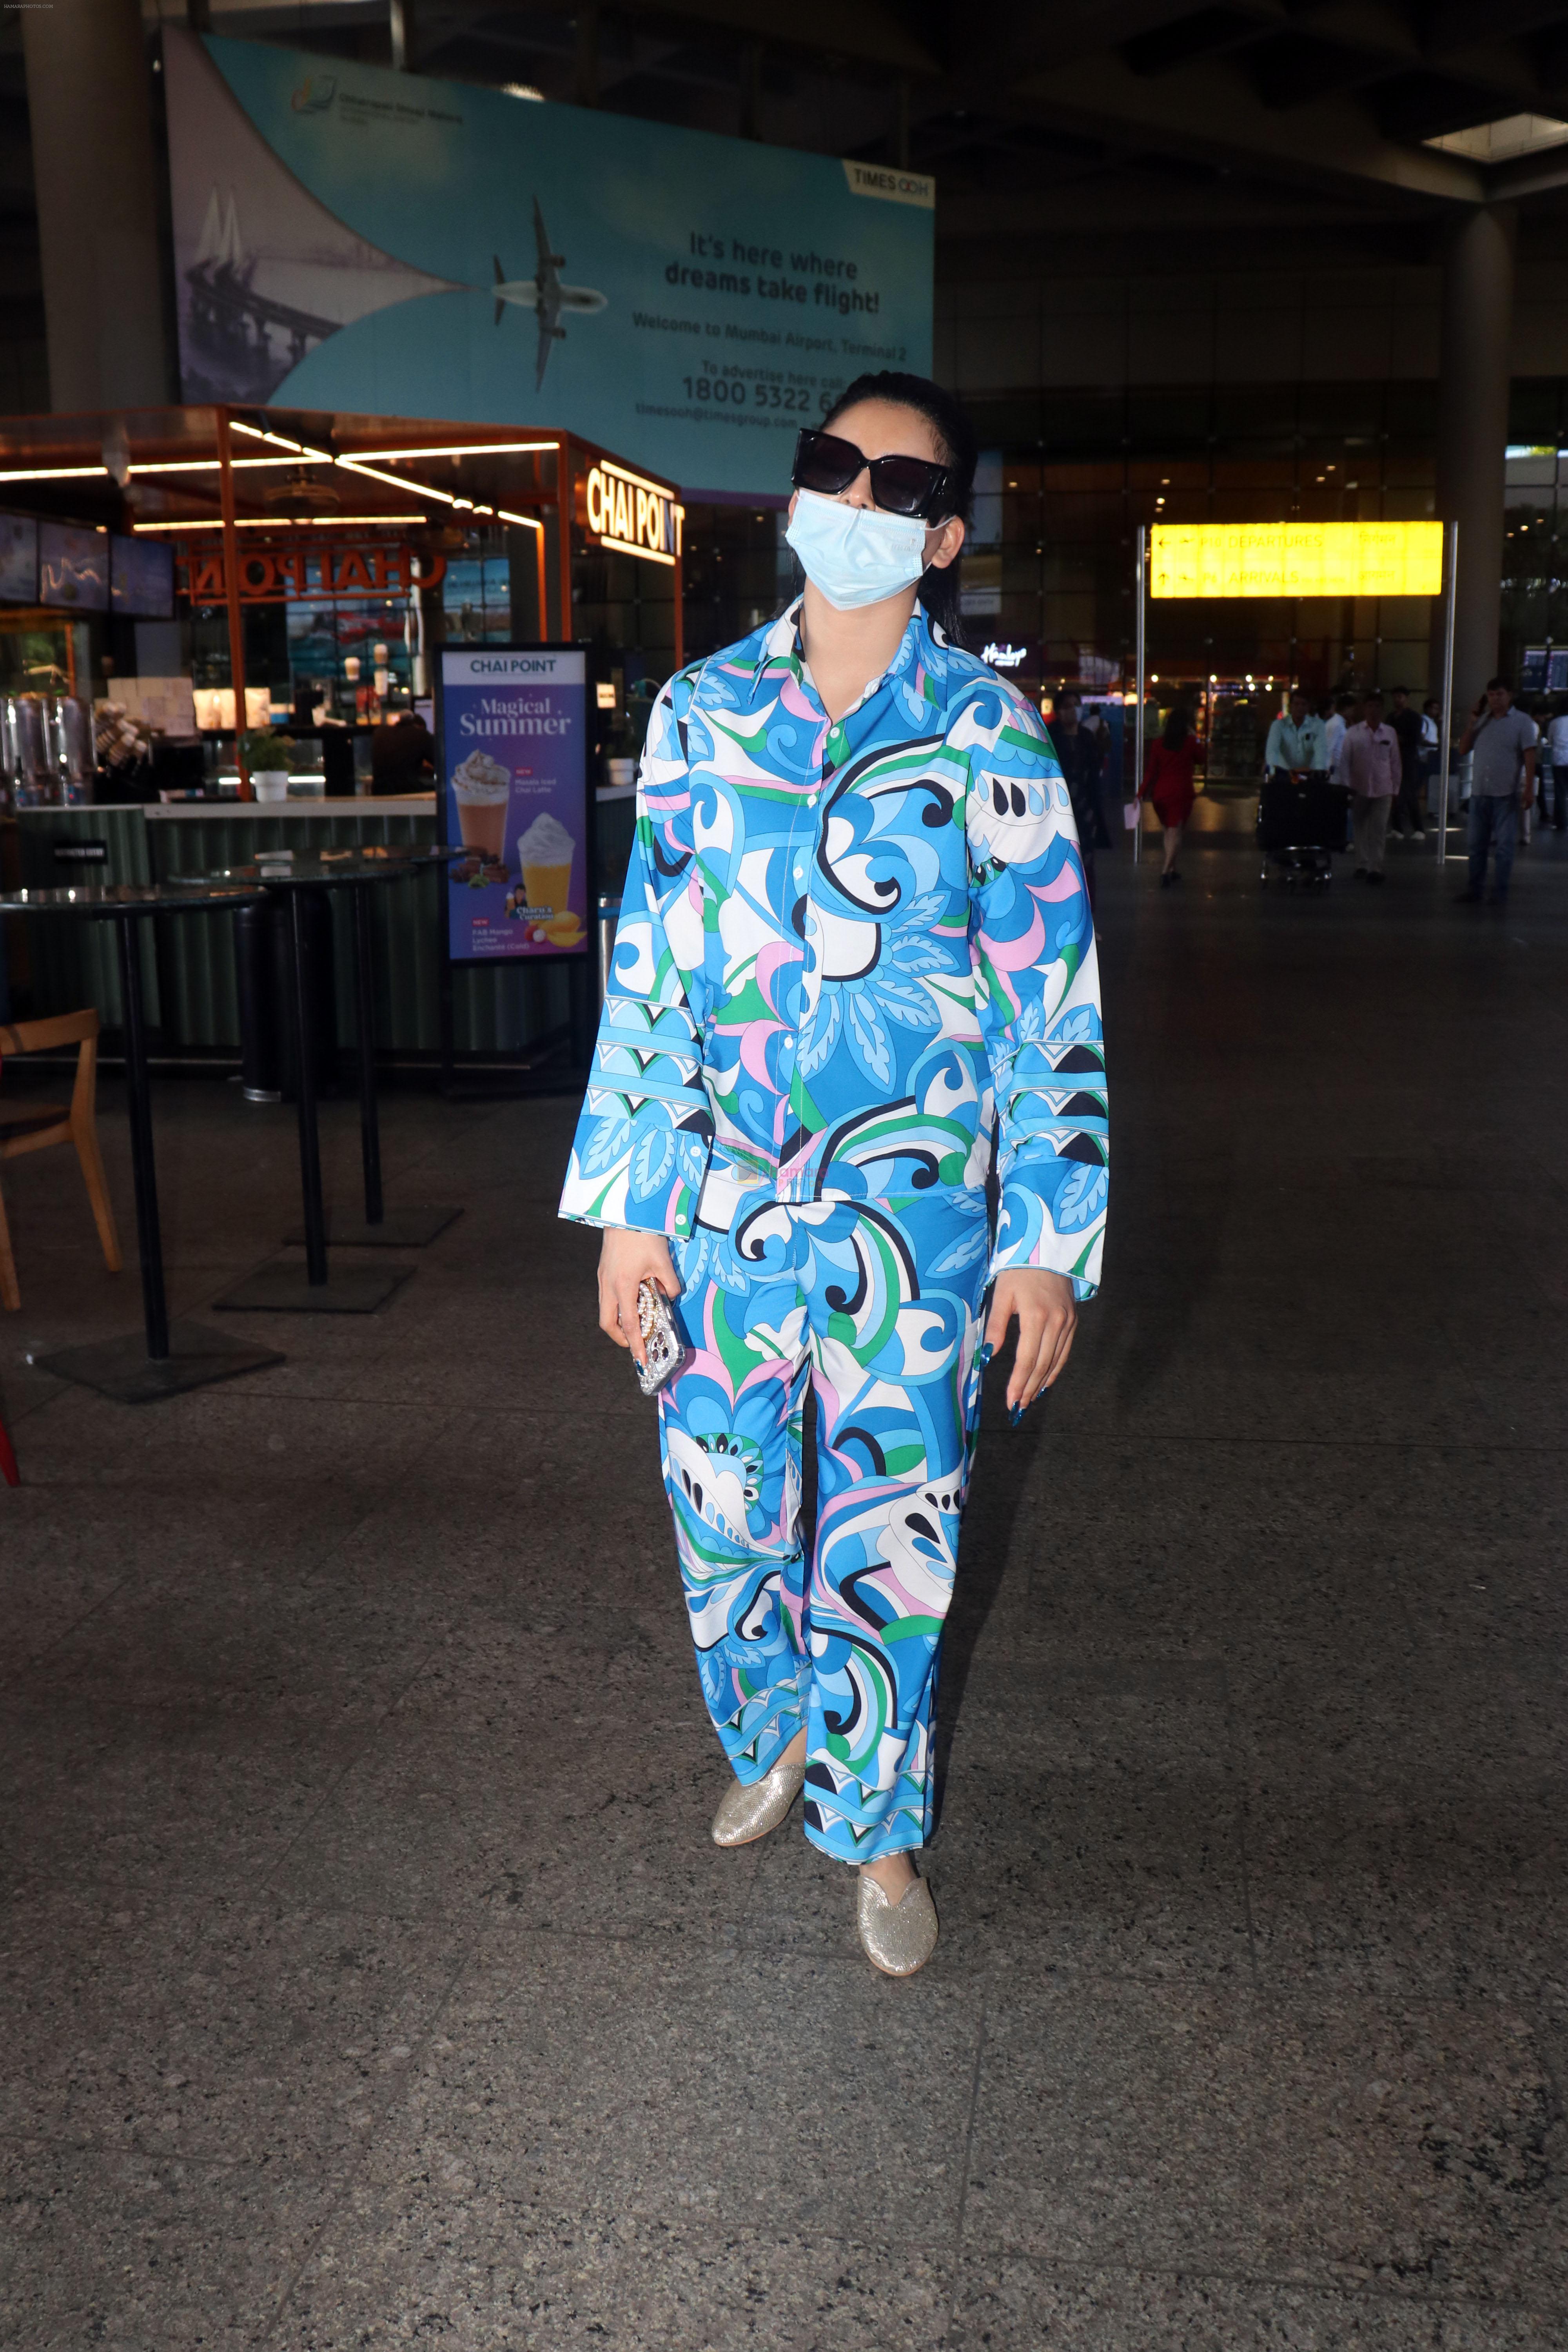 Urvashi Rautela dressed in blue night suit mask and sunglasses